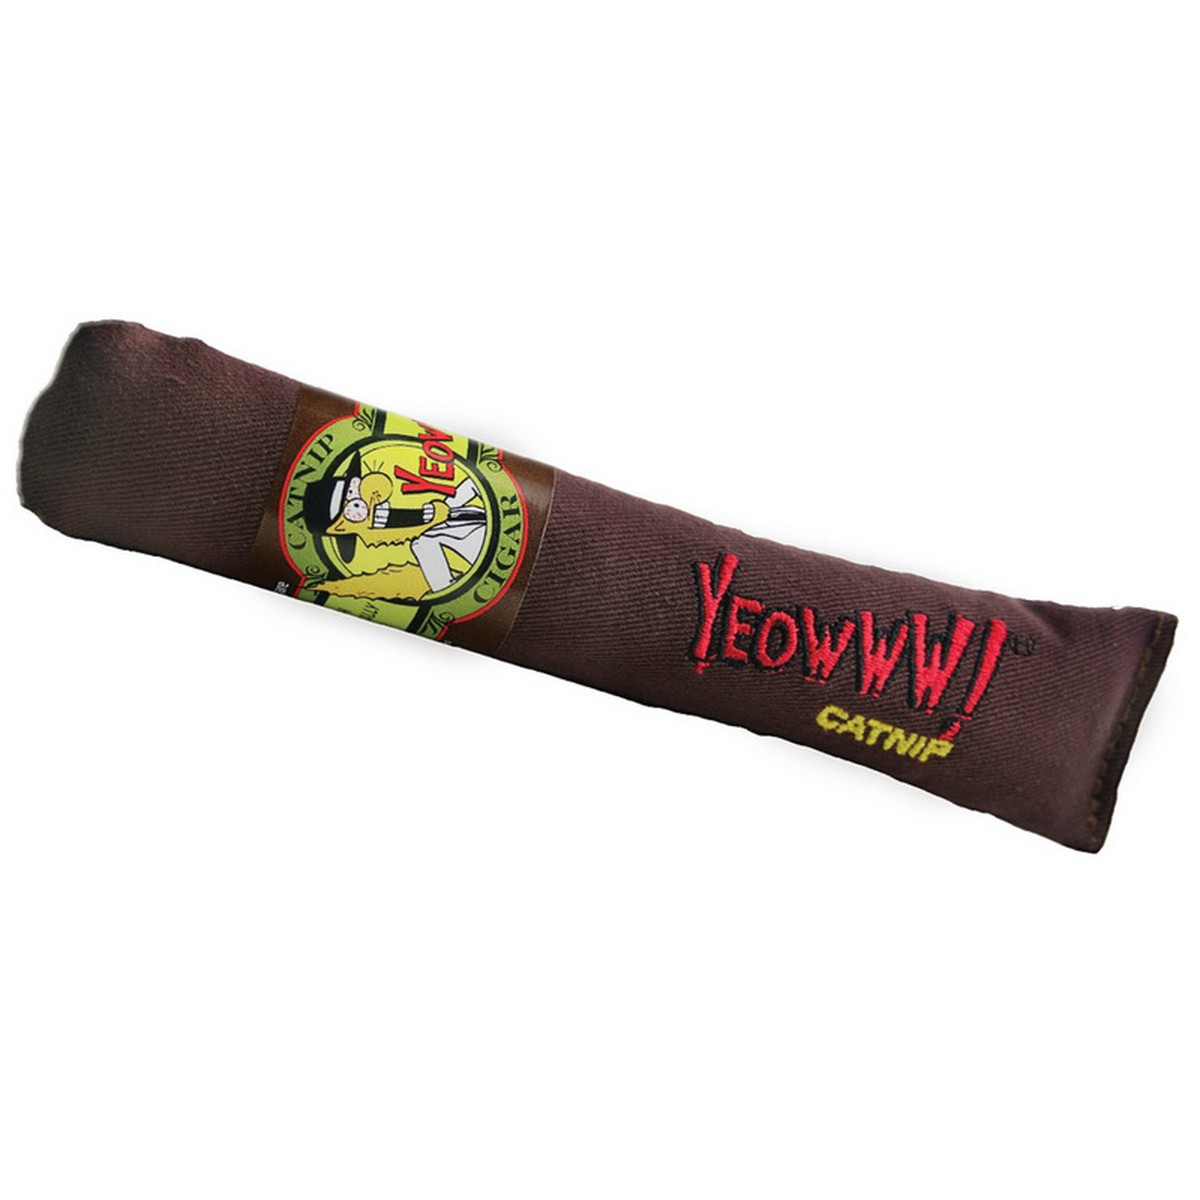   Cigar yeowww 18cm farci av. catnip  18cm